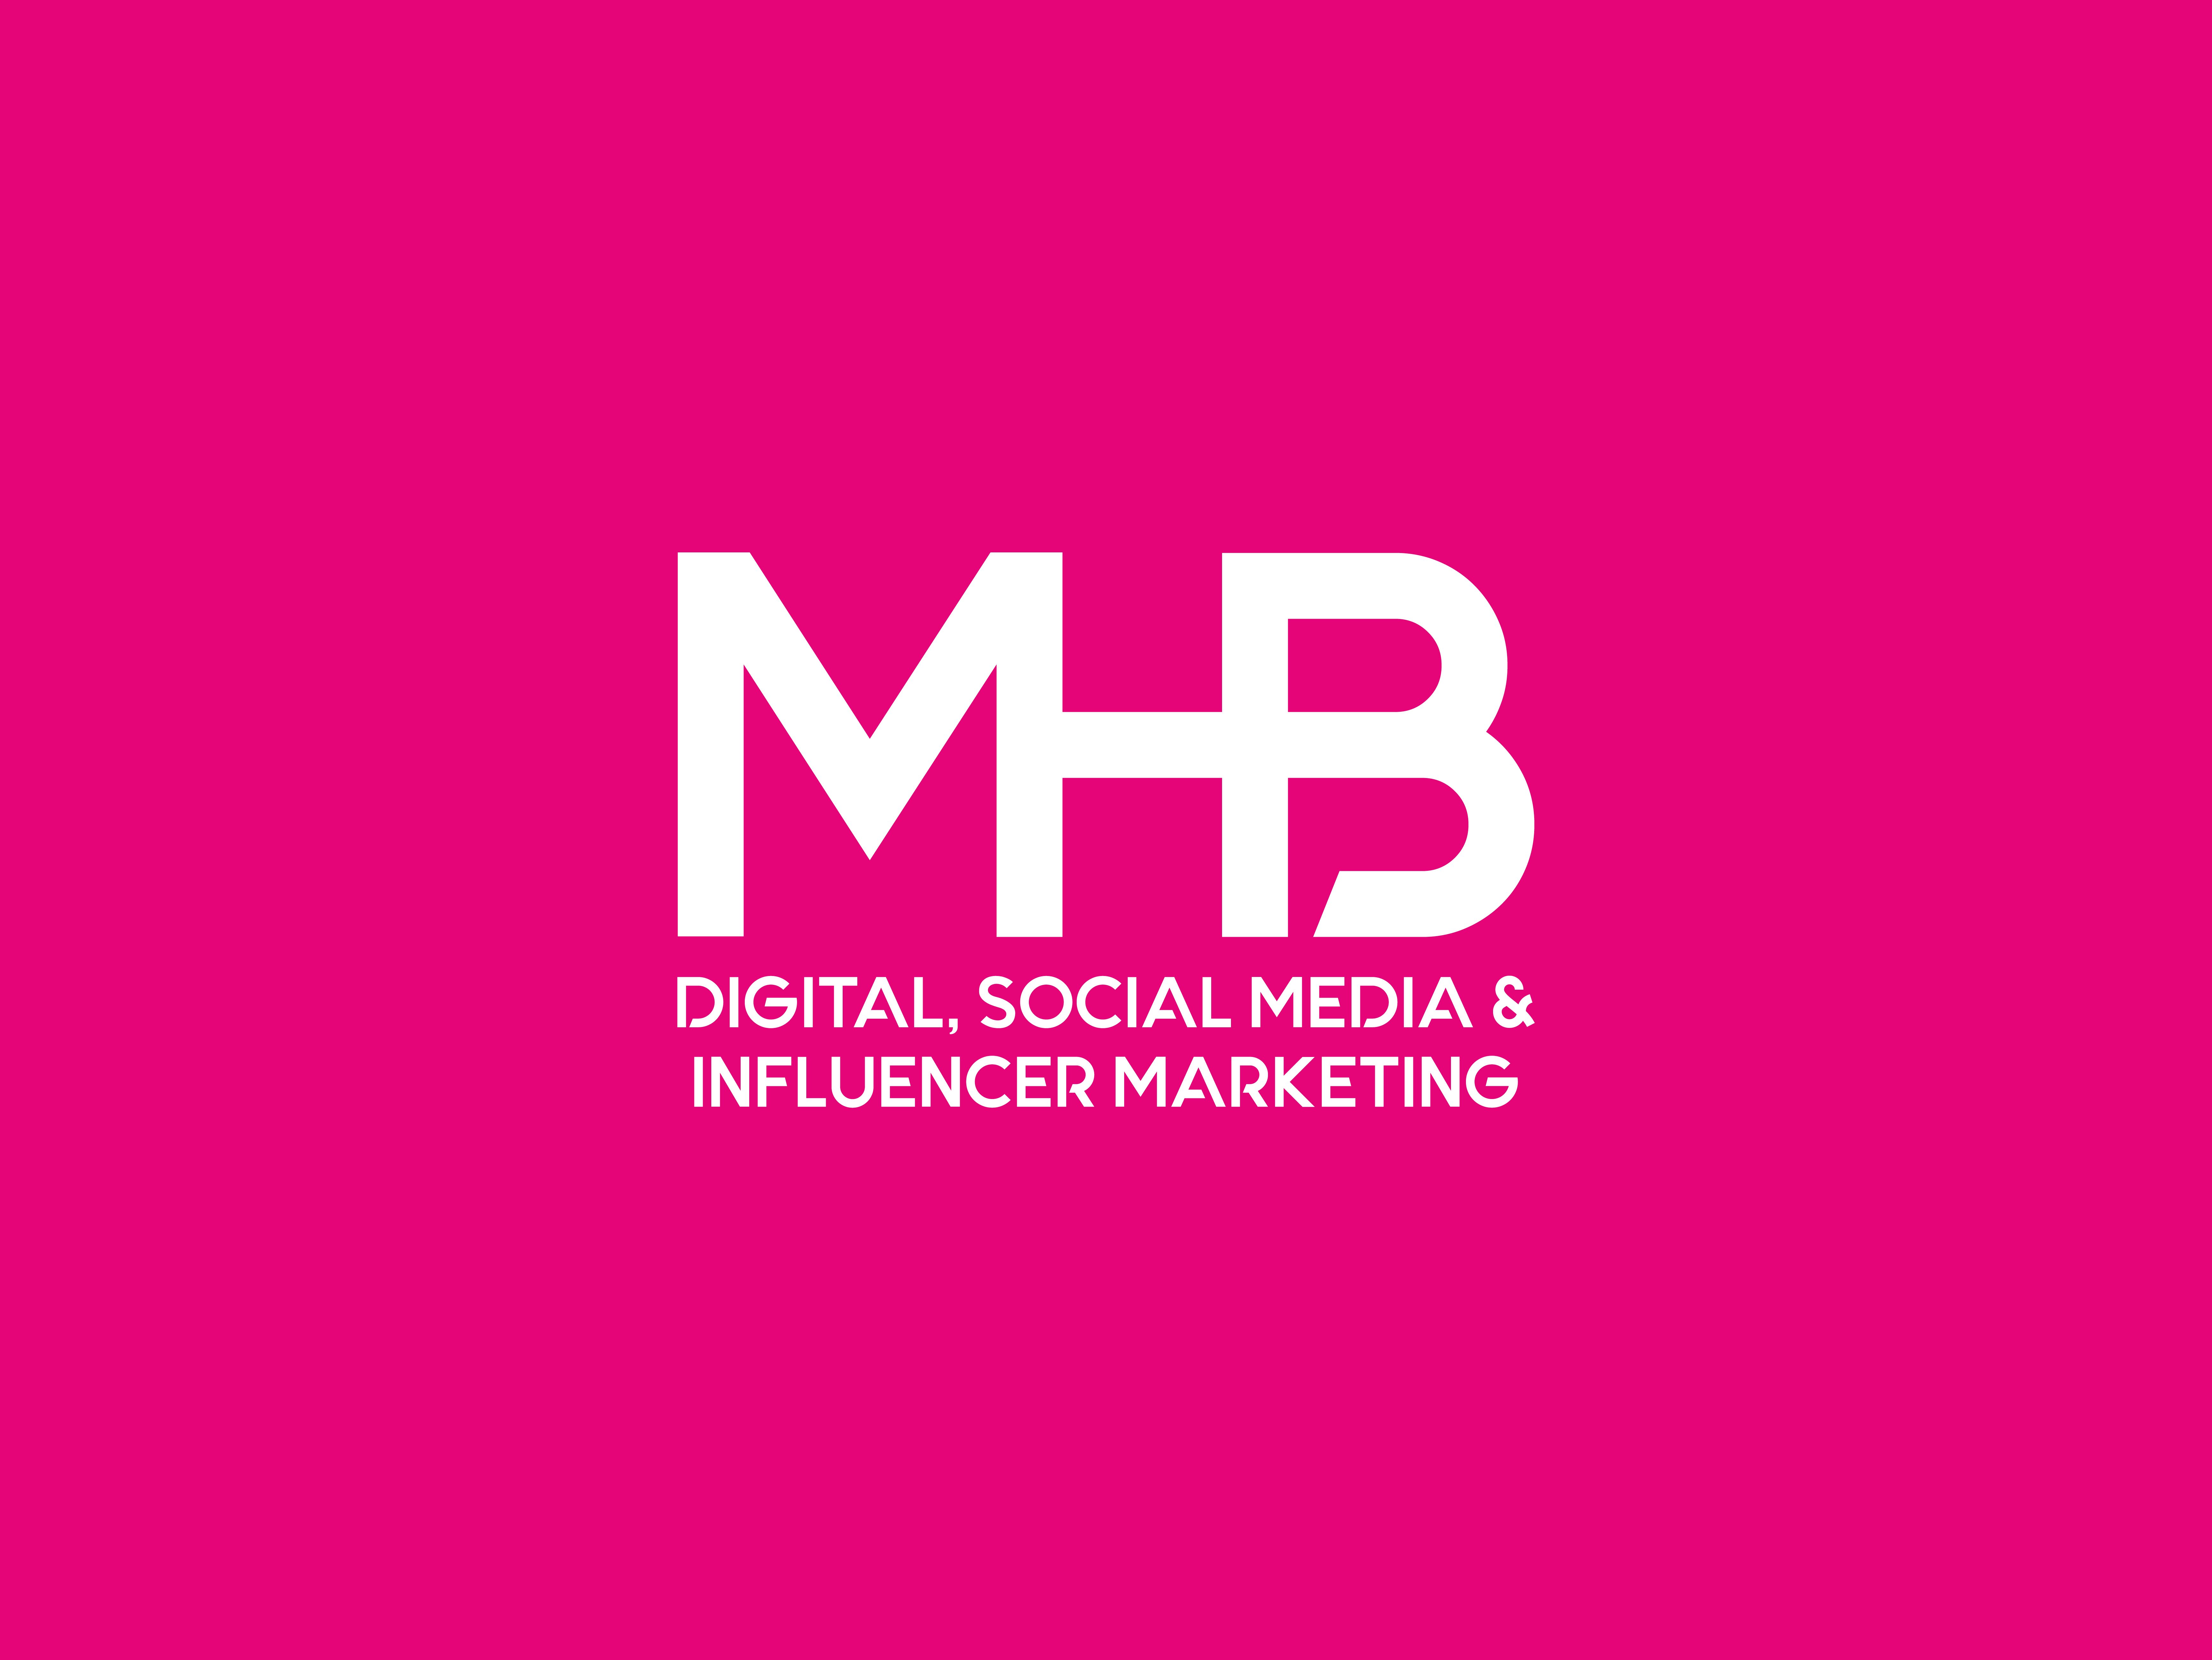 MHB Digital